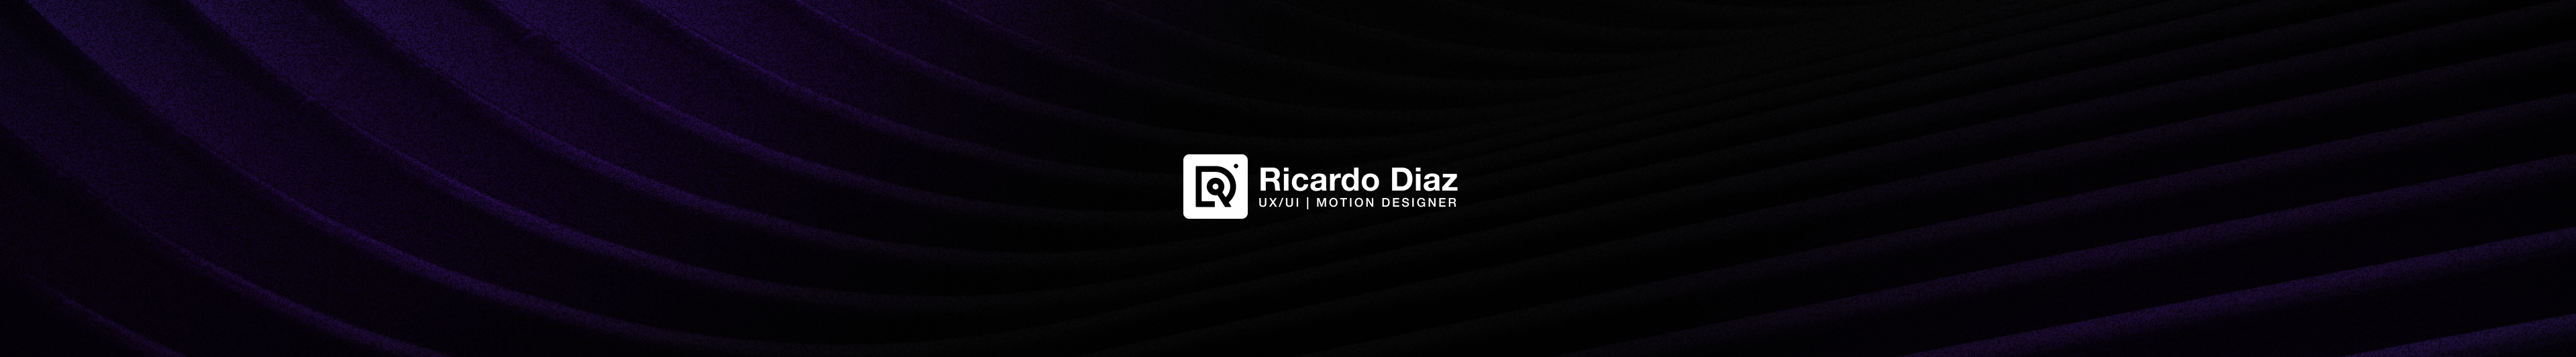 Ricardo Diaz's profile banner